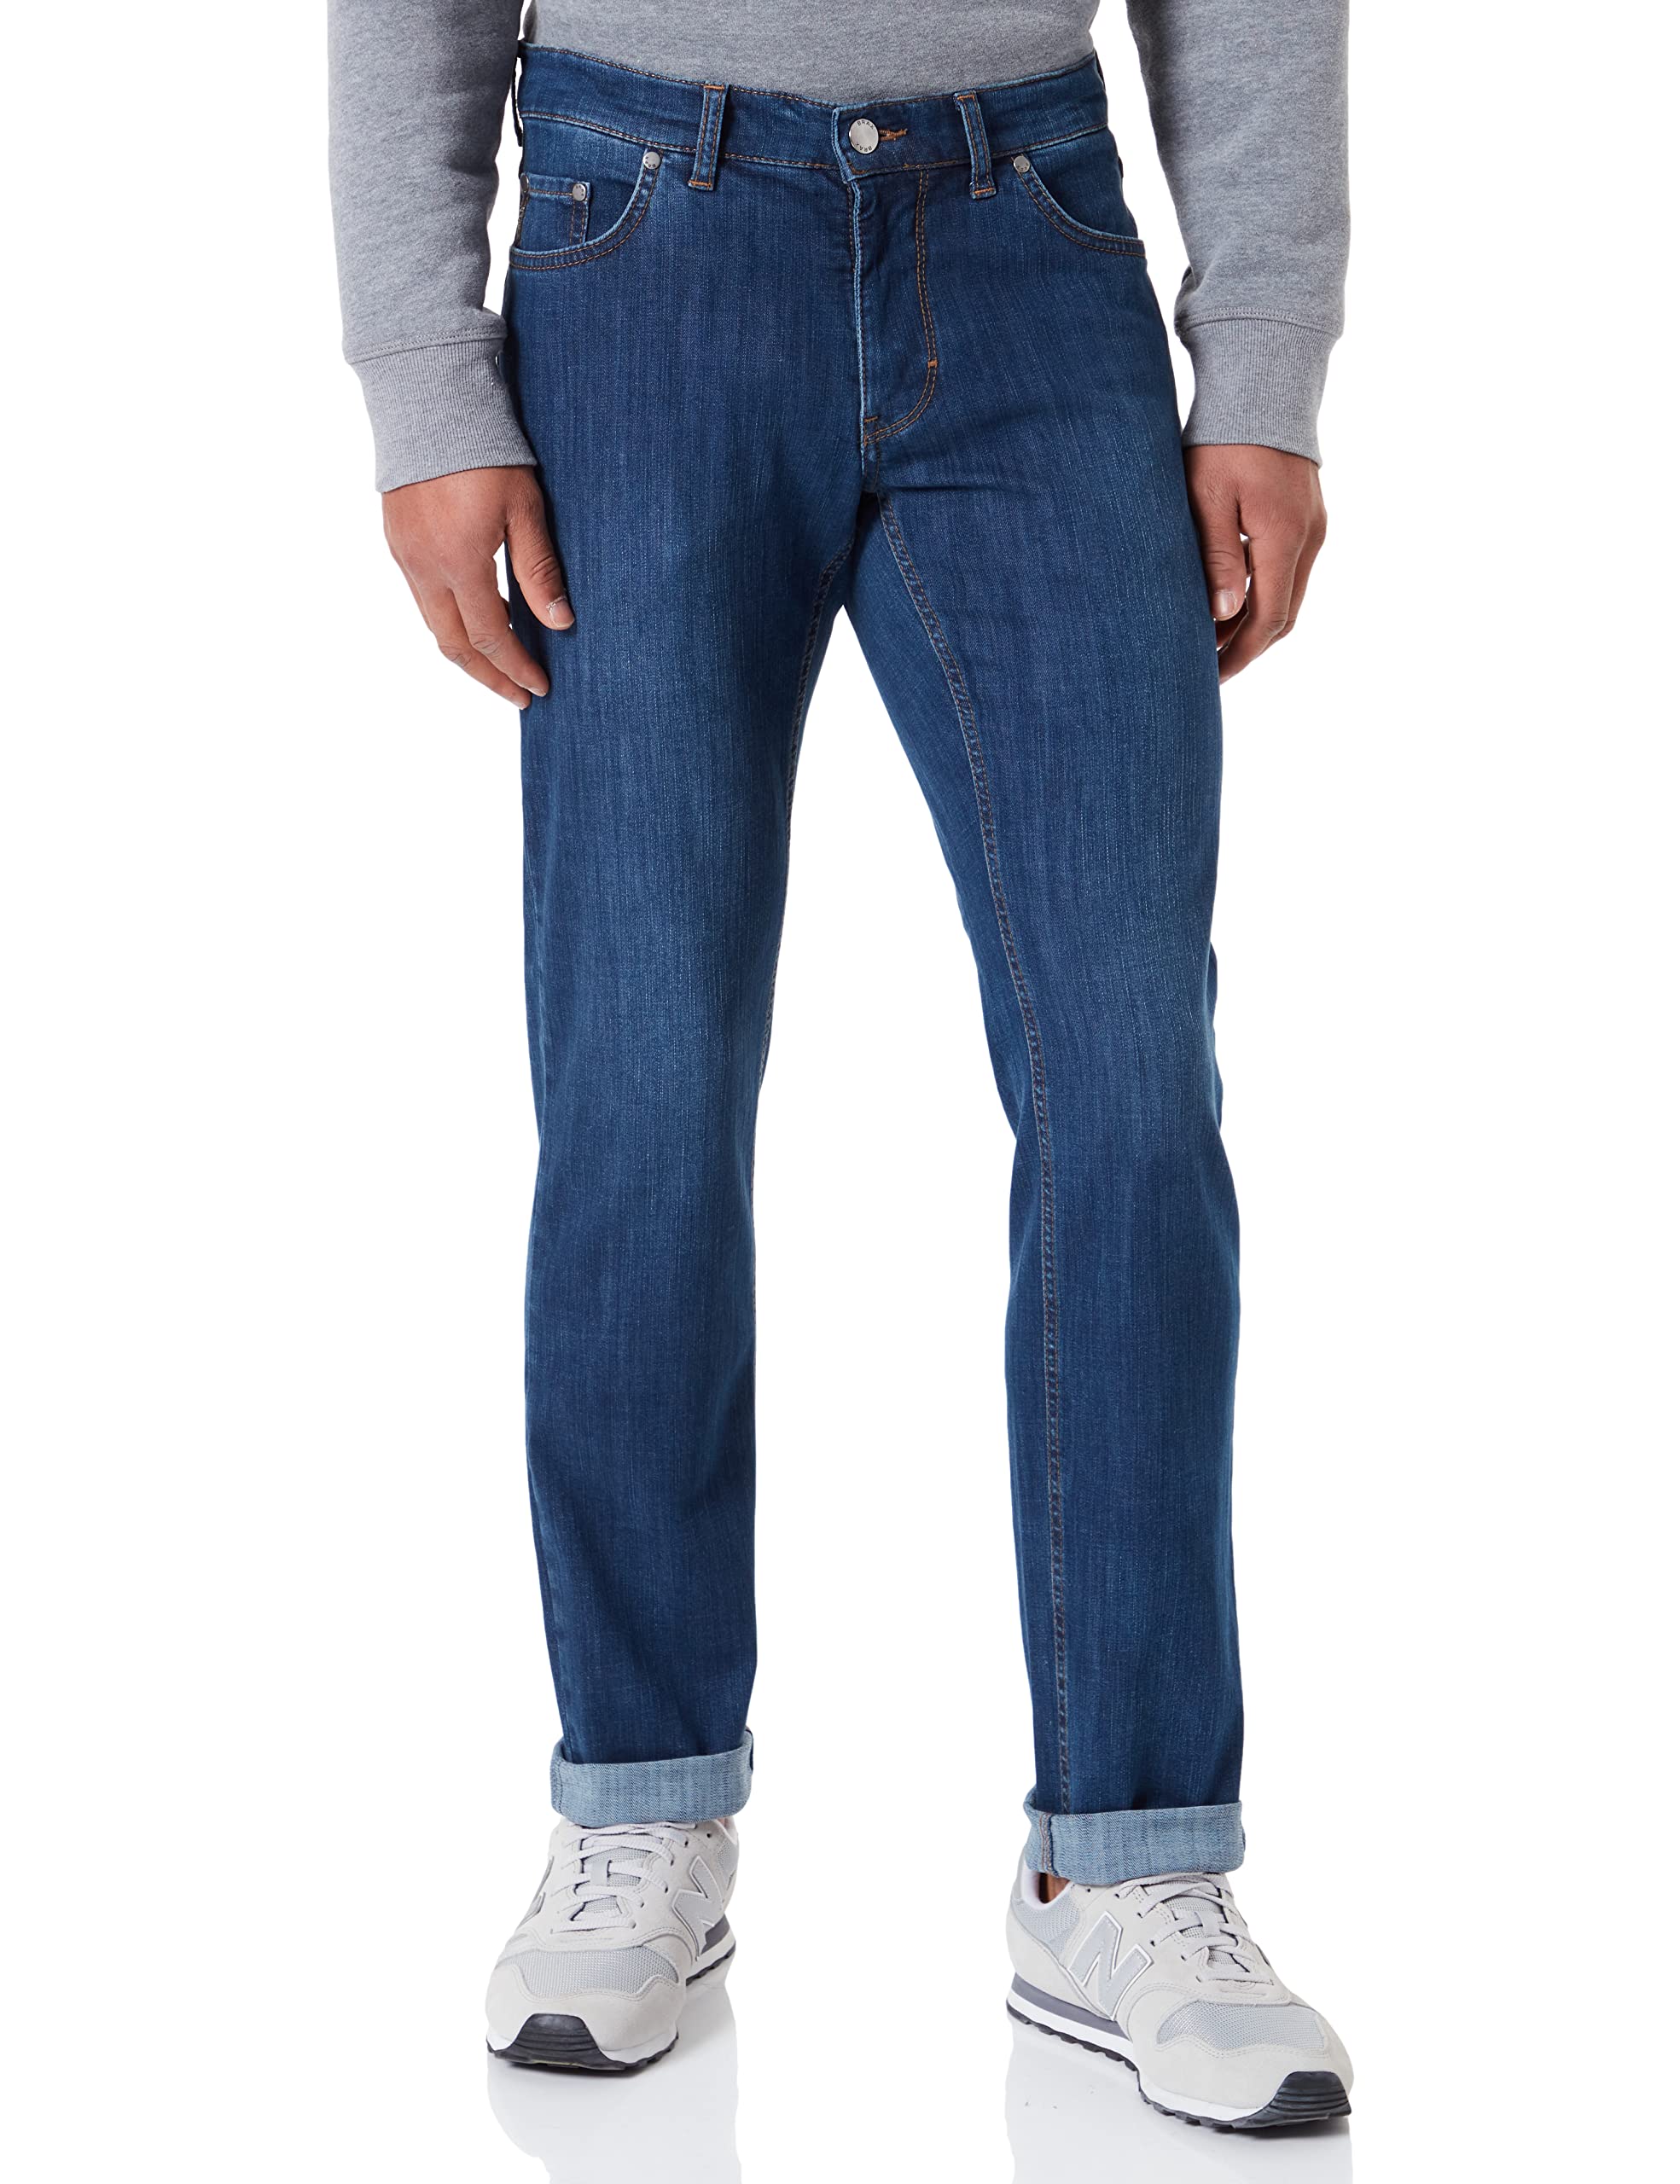 BRAX Herren Style Cooper Denim Masterpiece Jeans , Regular Blue Used, 32W / 32L